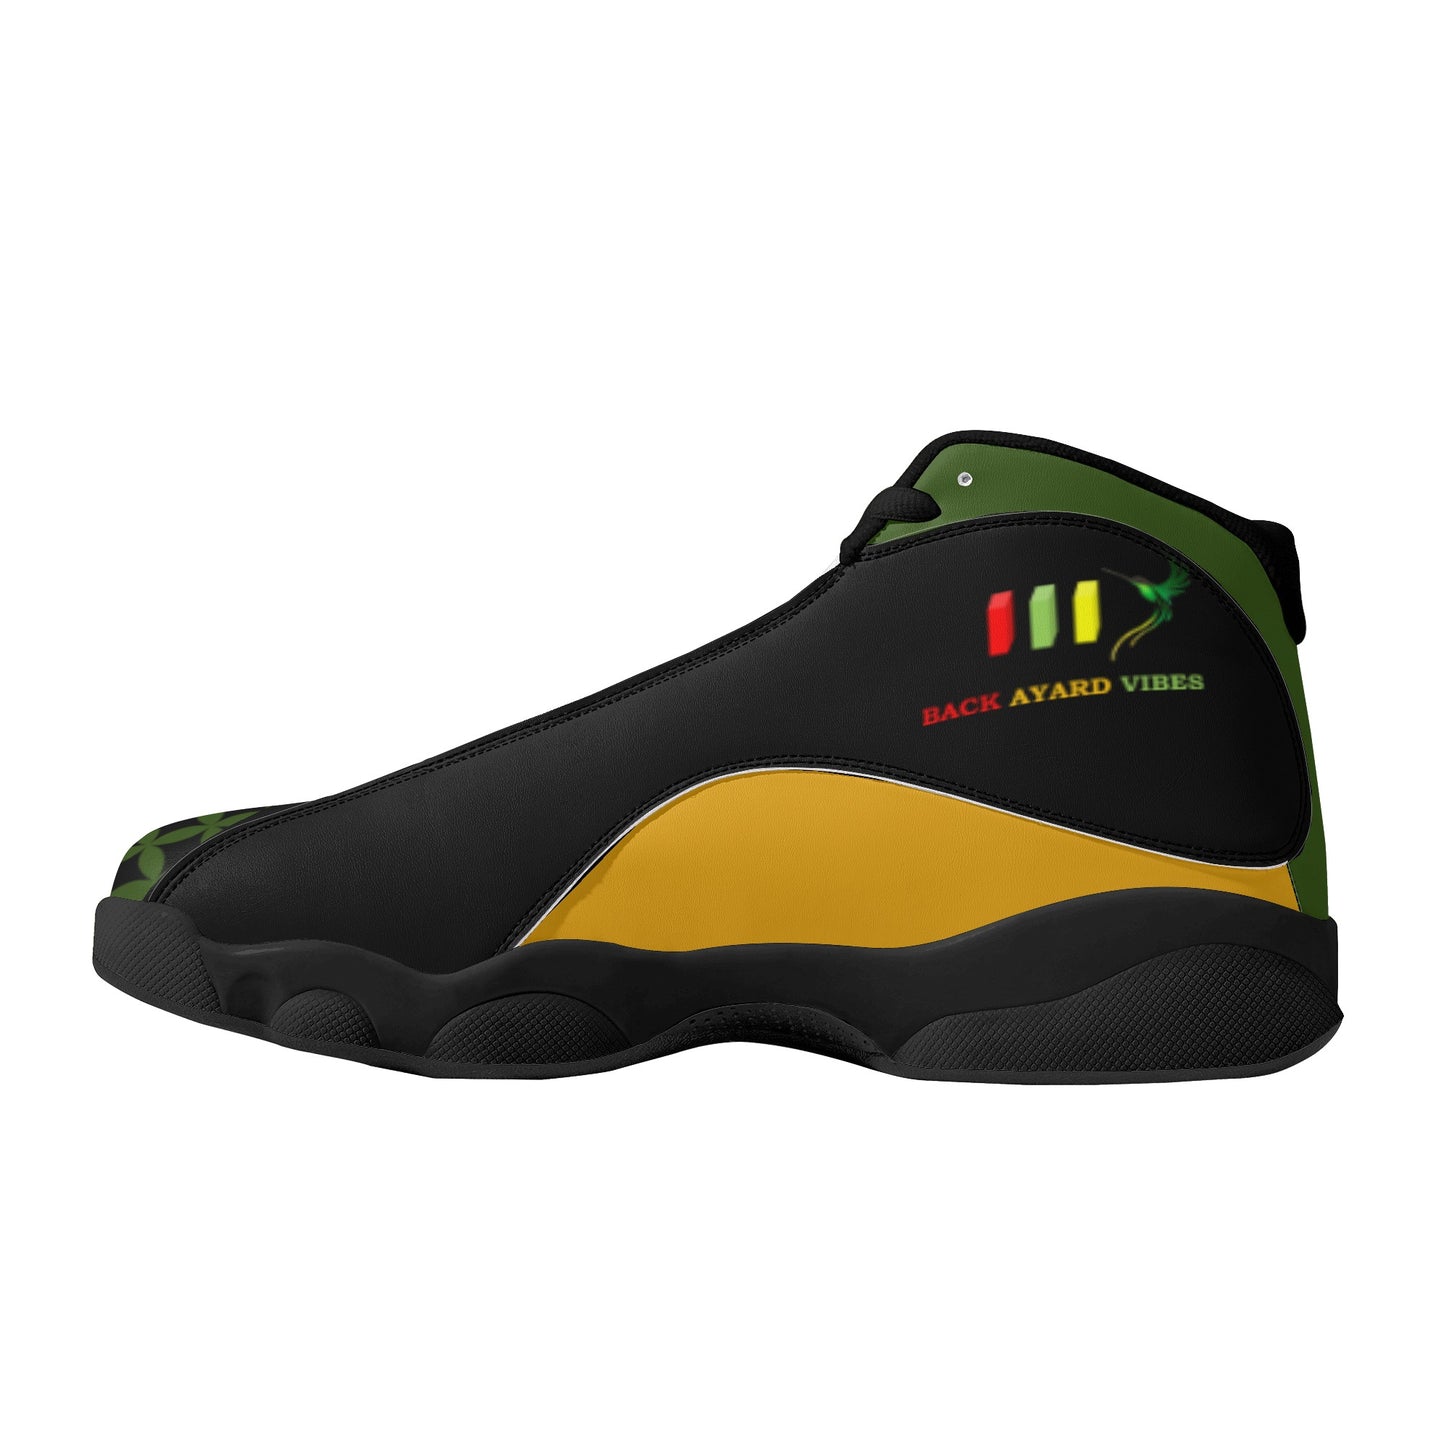 Back A Yard Men's Black Soles Basketball Shoes